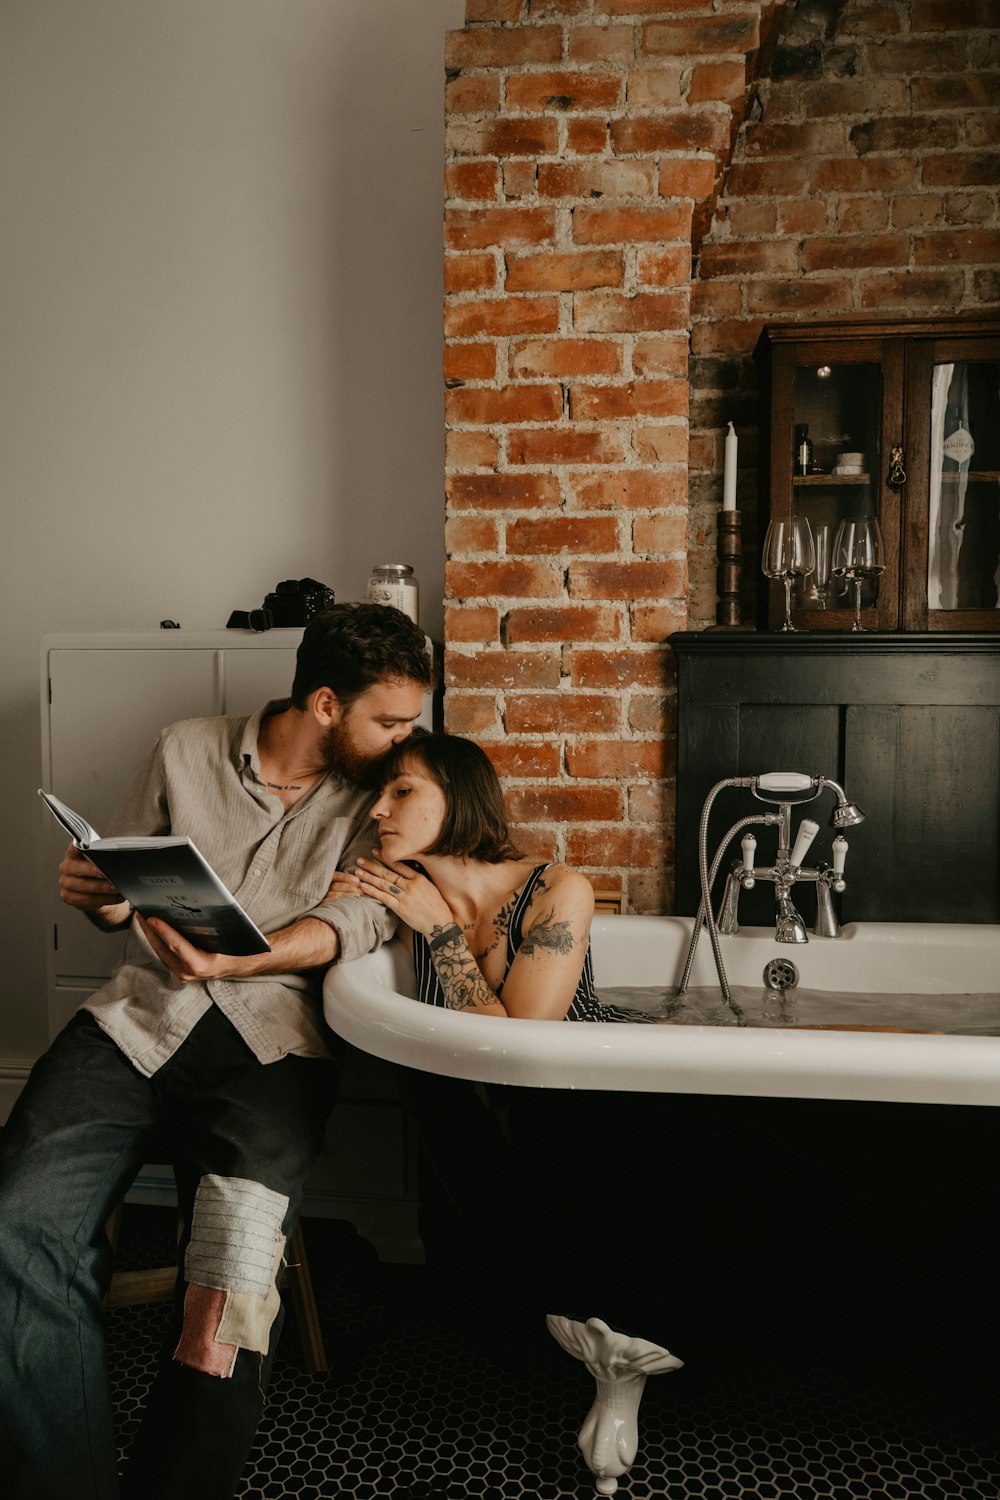 man and woman kissing on bathtub